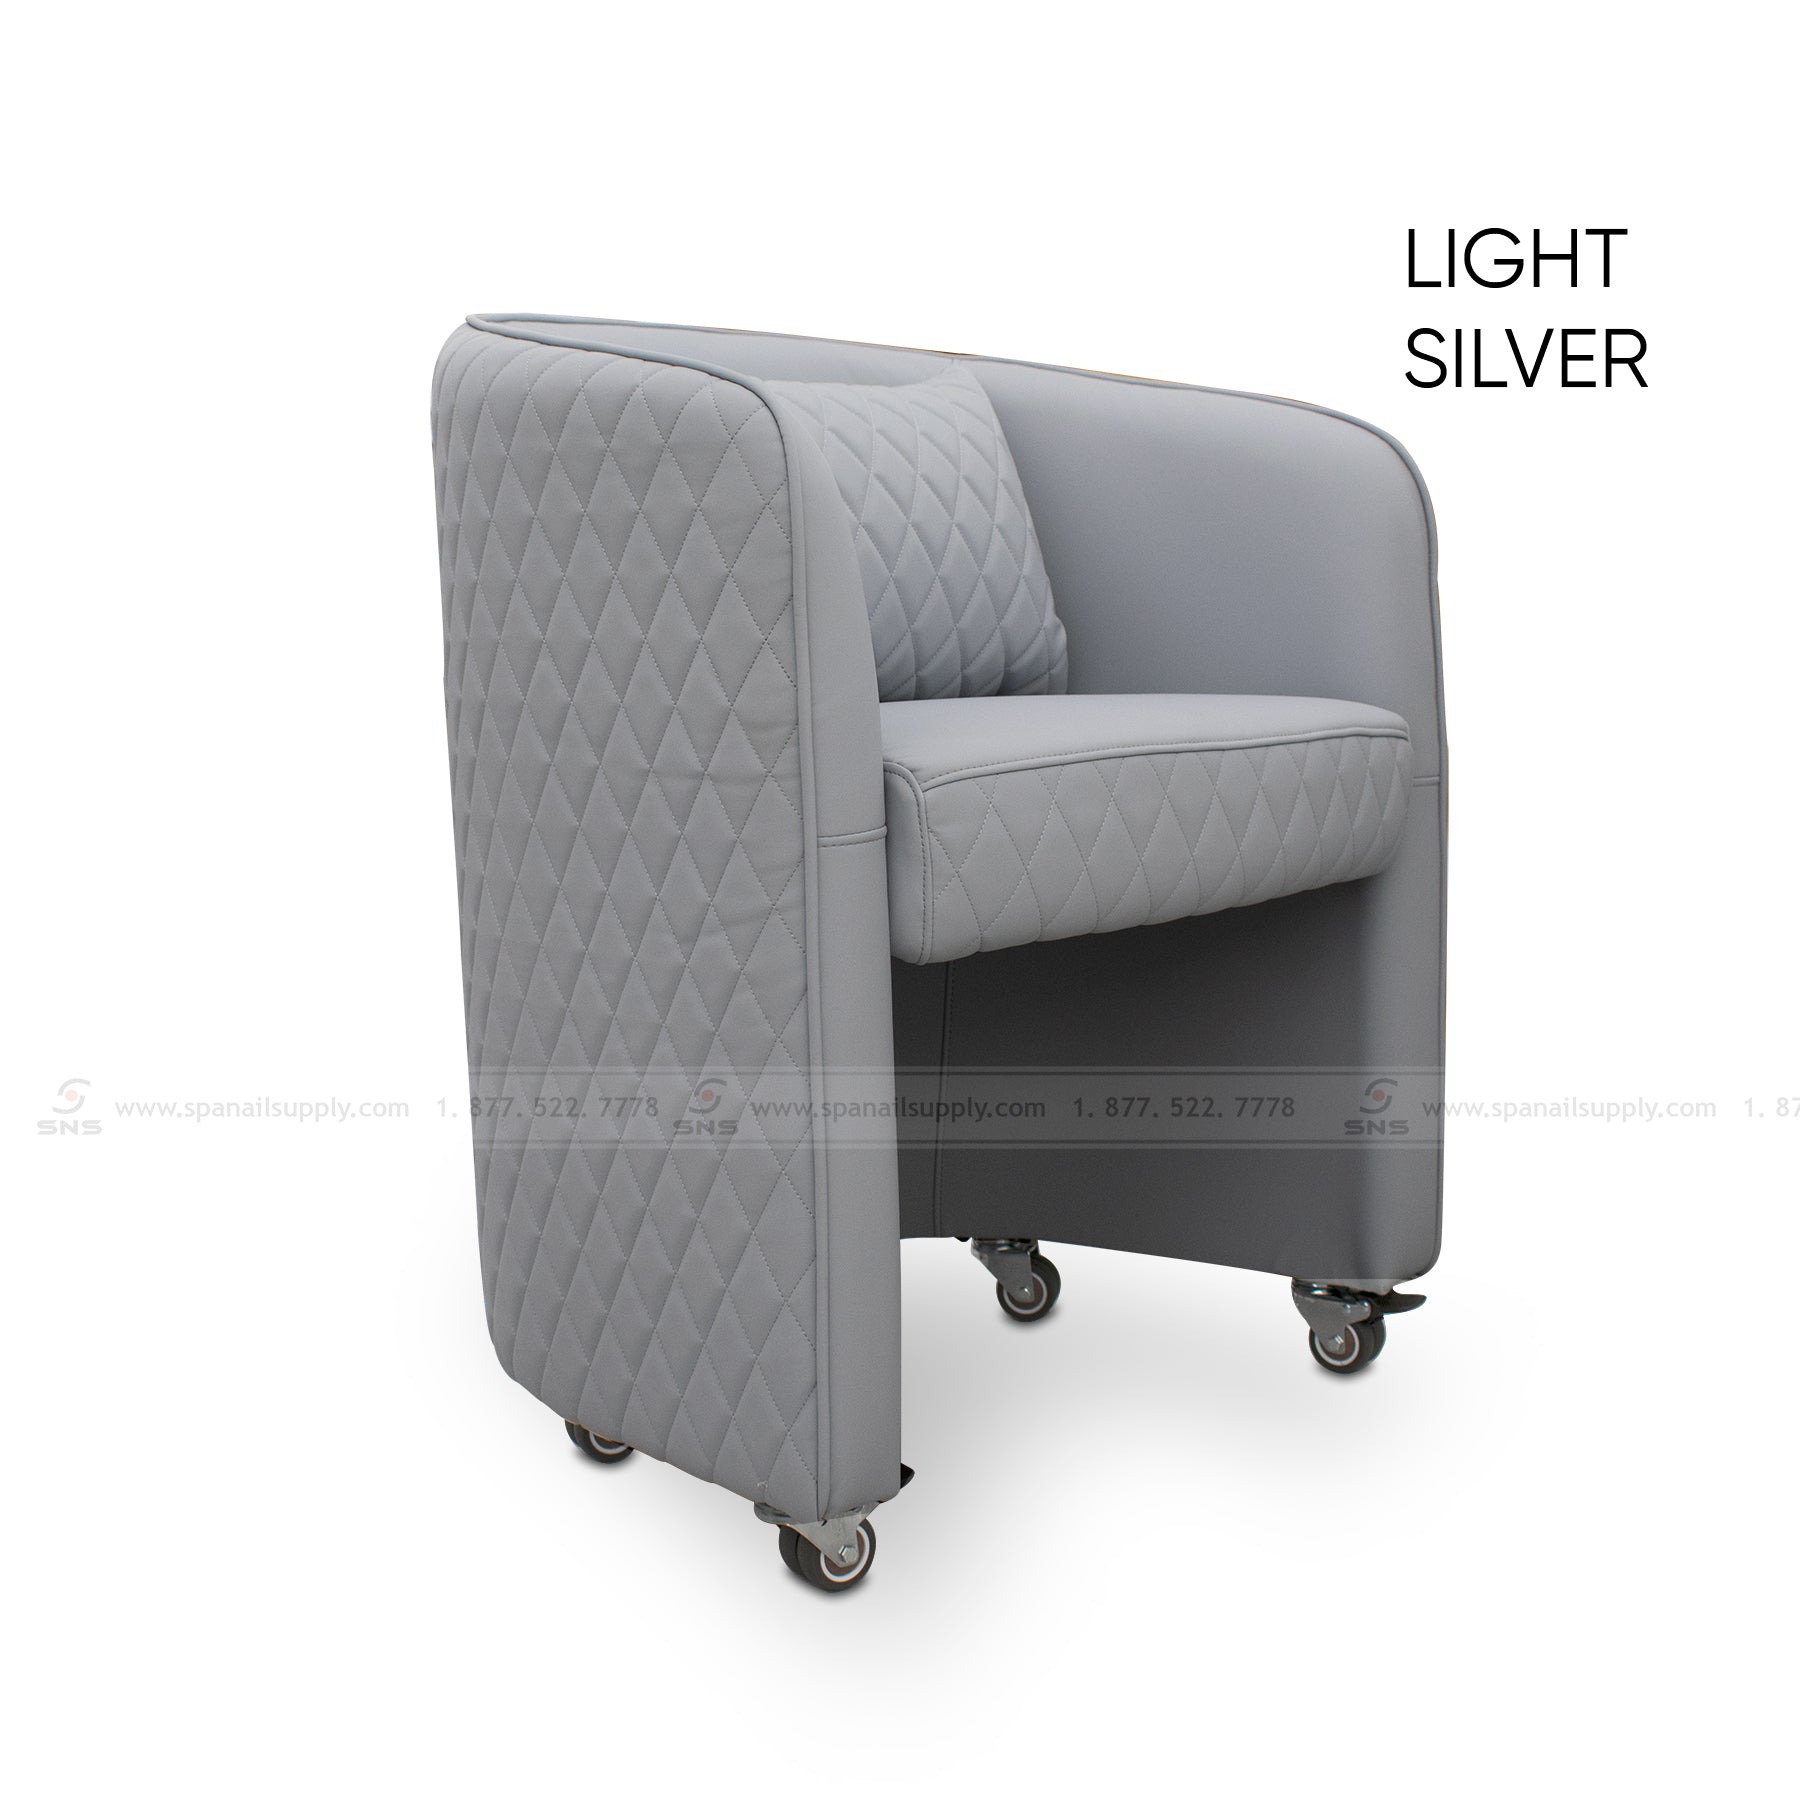 Adele Customer Chair Light Silver